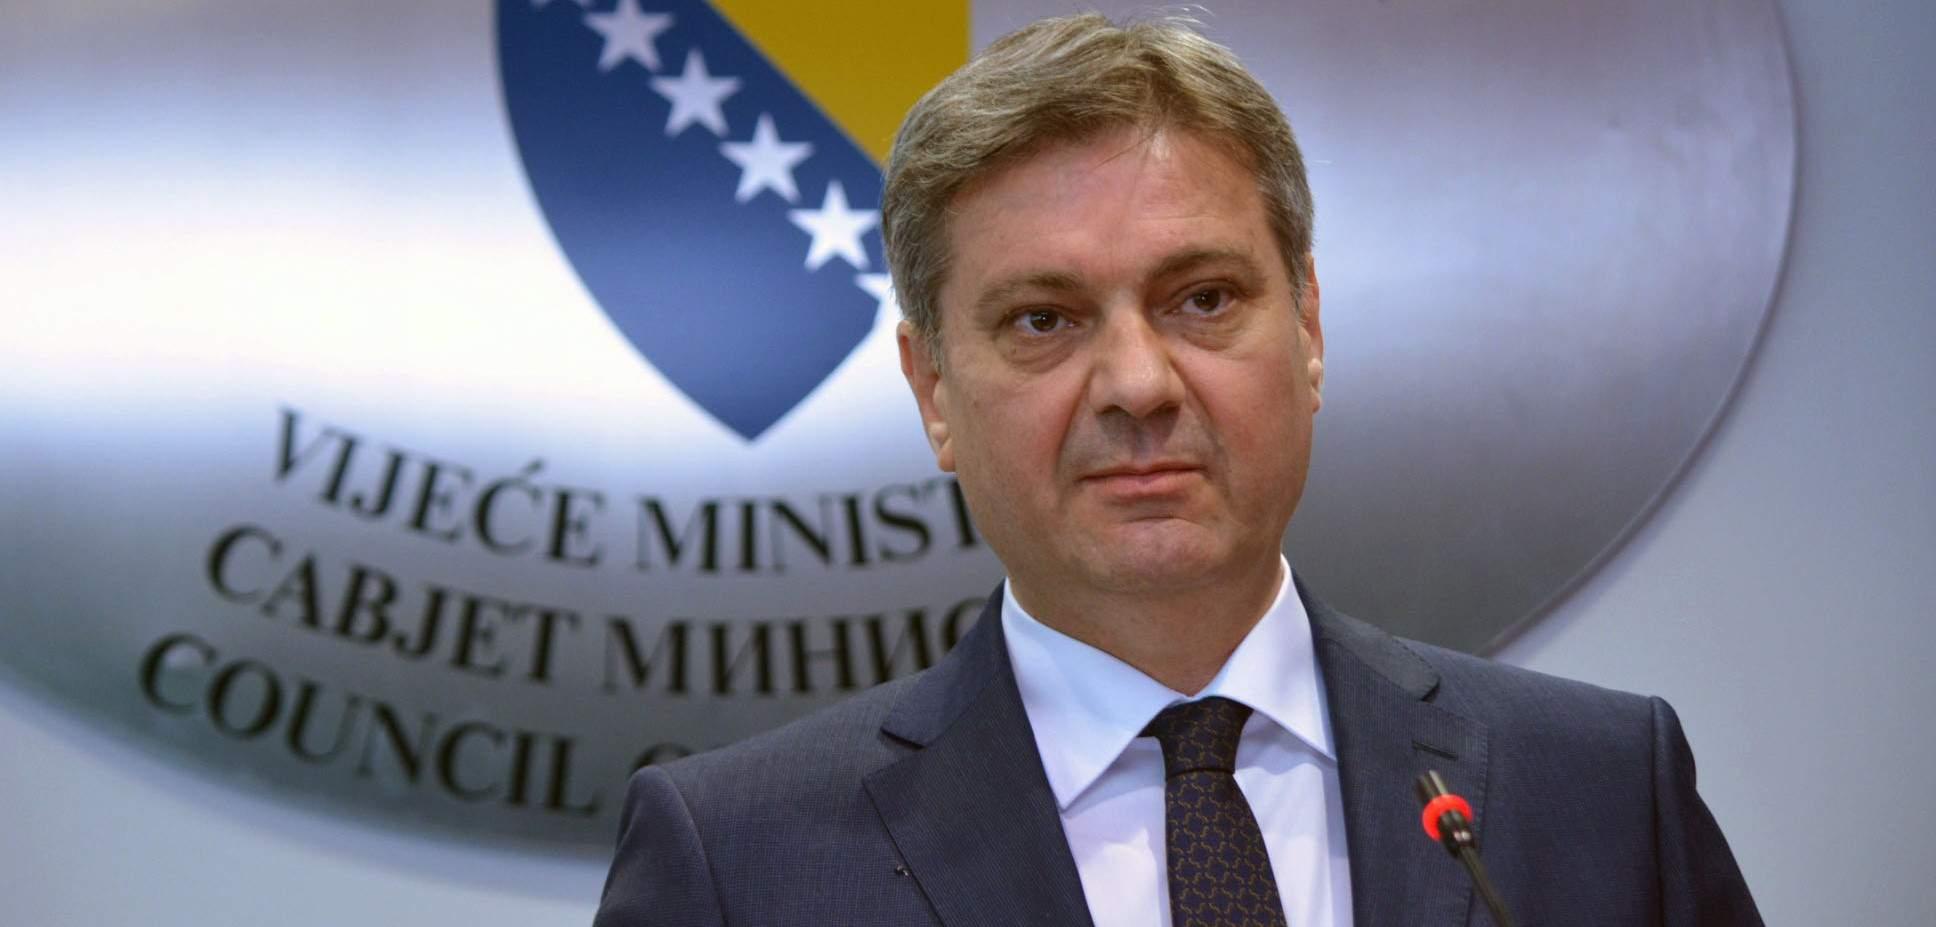 Zvizdić: B&H needs to show serious credibility in application for EU membership